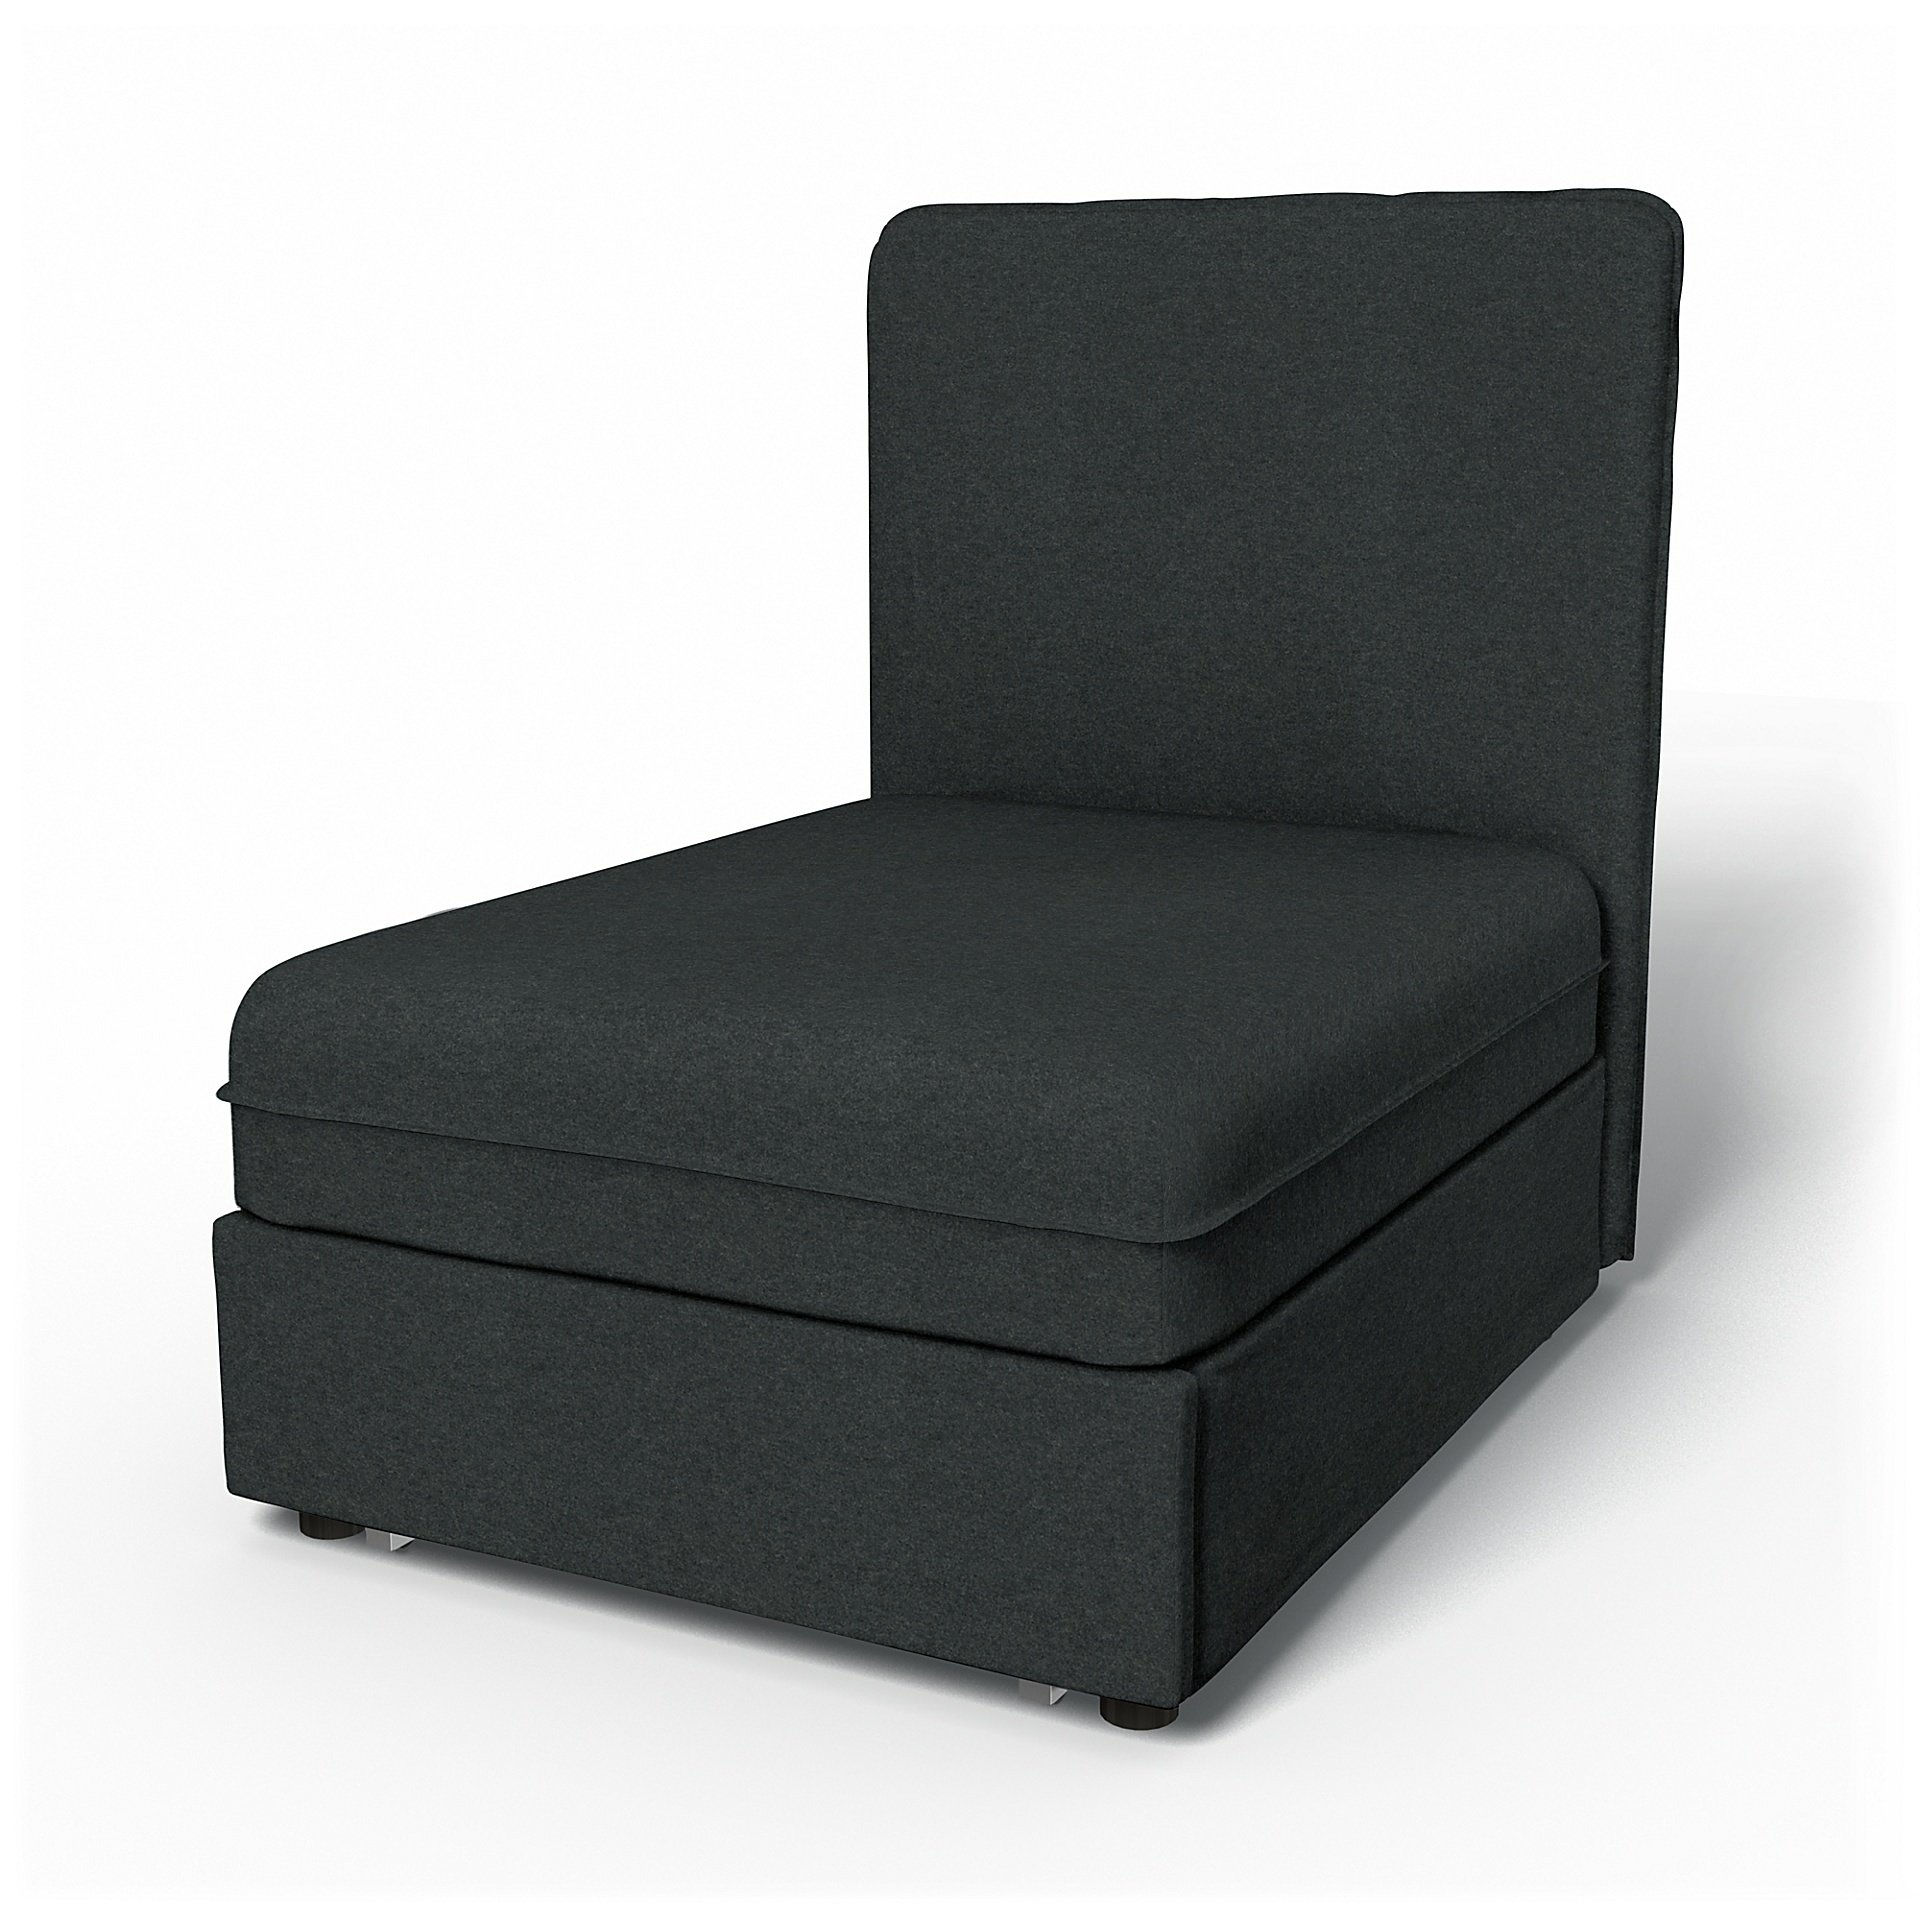 IKEA - Vallentuna Seat Module with High Back Sofa Bed Cover (80x100x46cm), Stone, Wool - Bemz